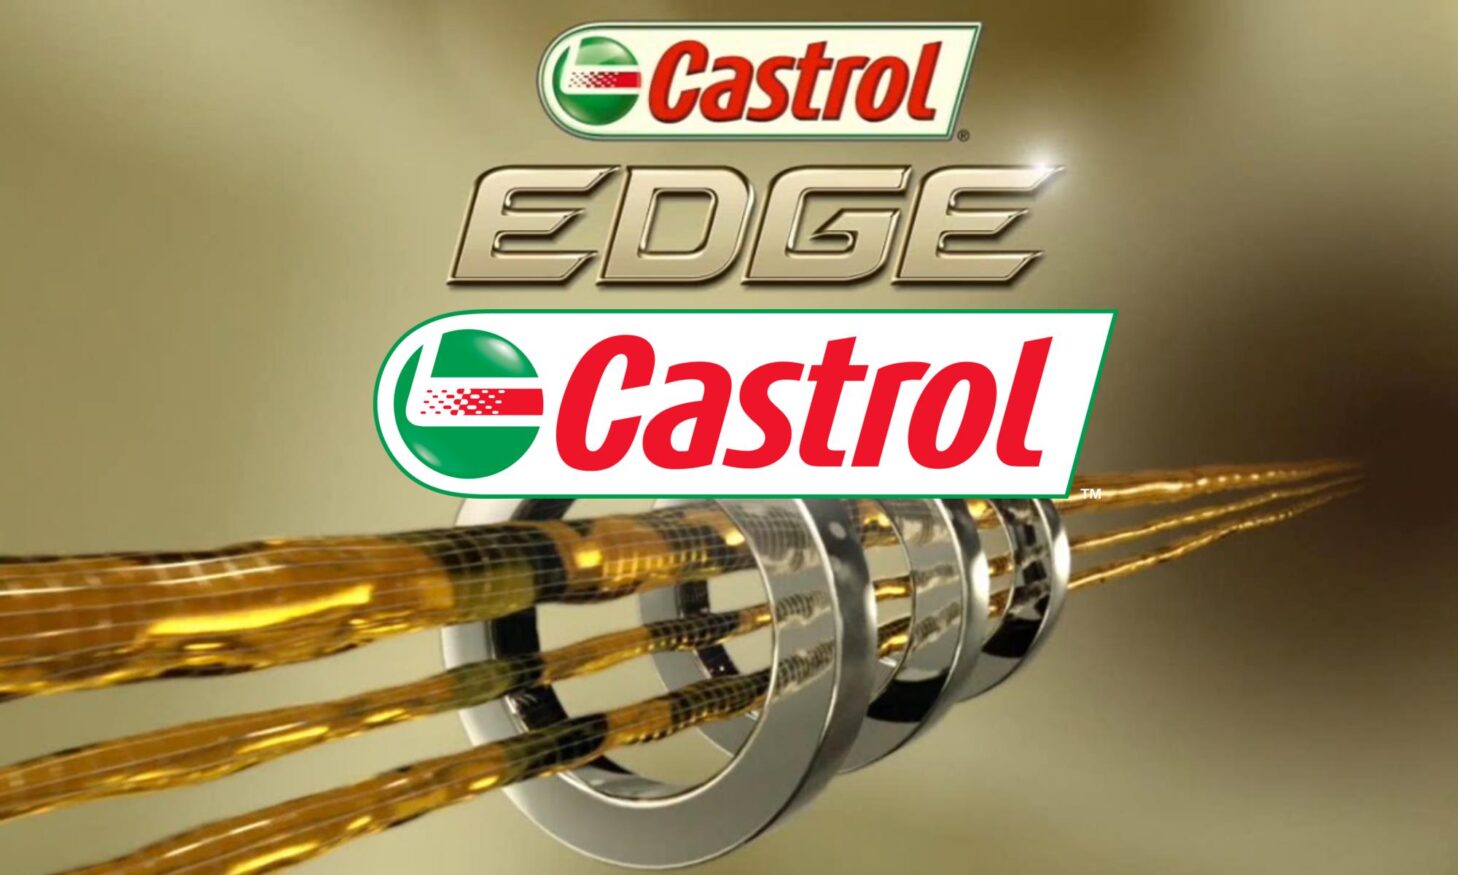 castrol oil - logo reklame